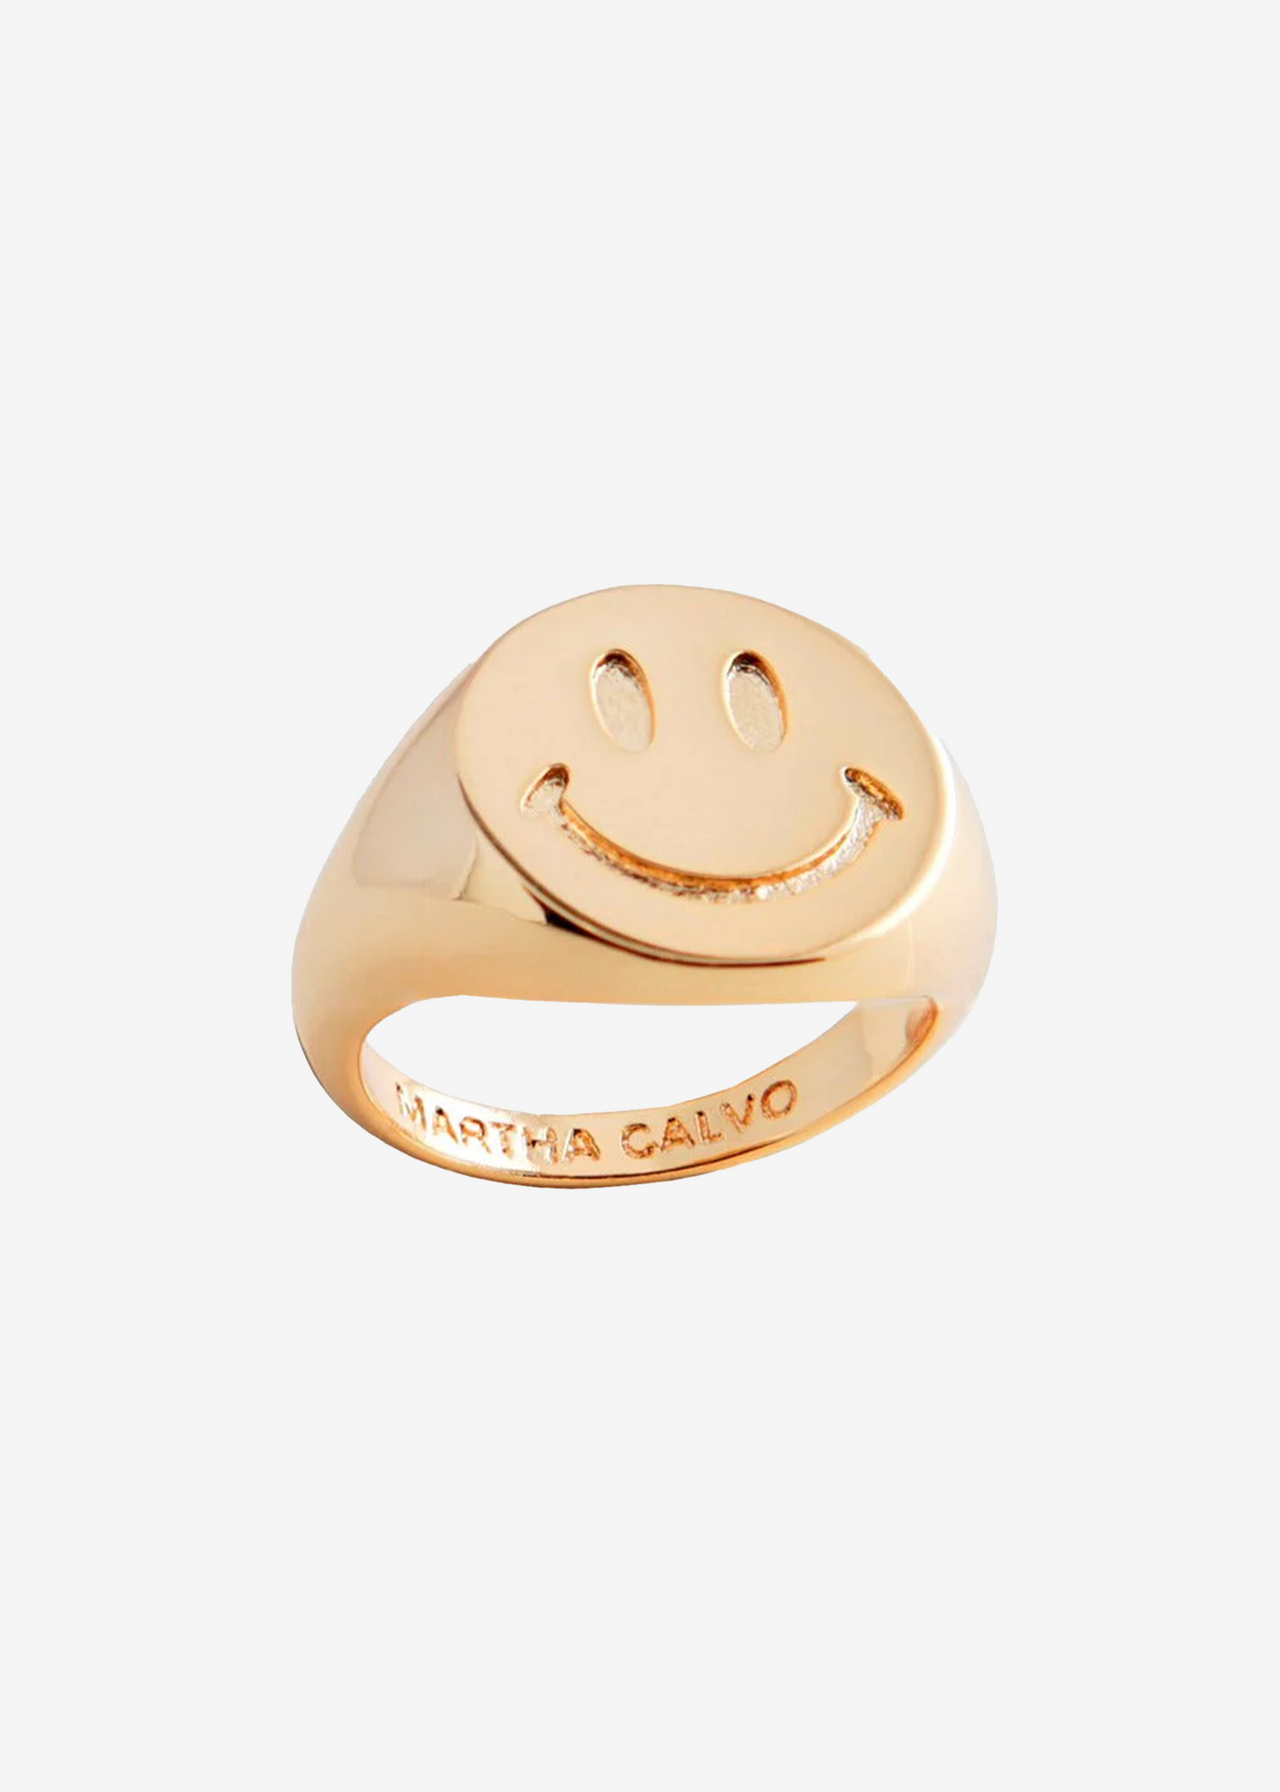 Be Happy Signet Ring by Martha Calvo